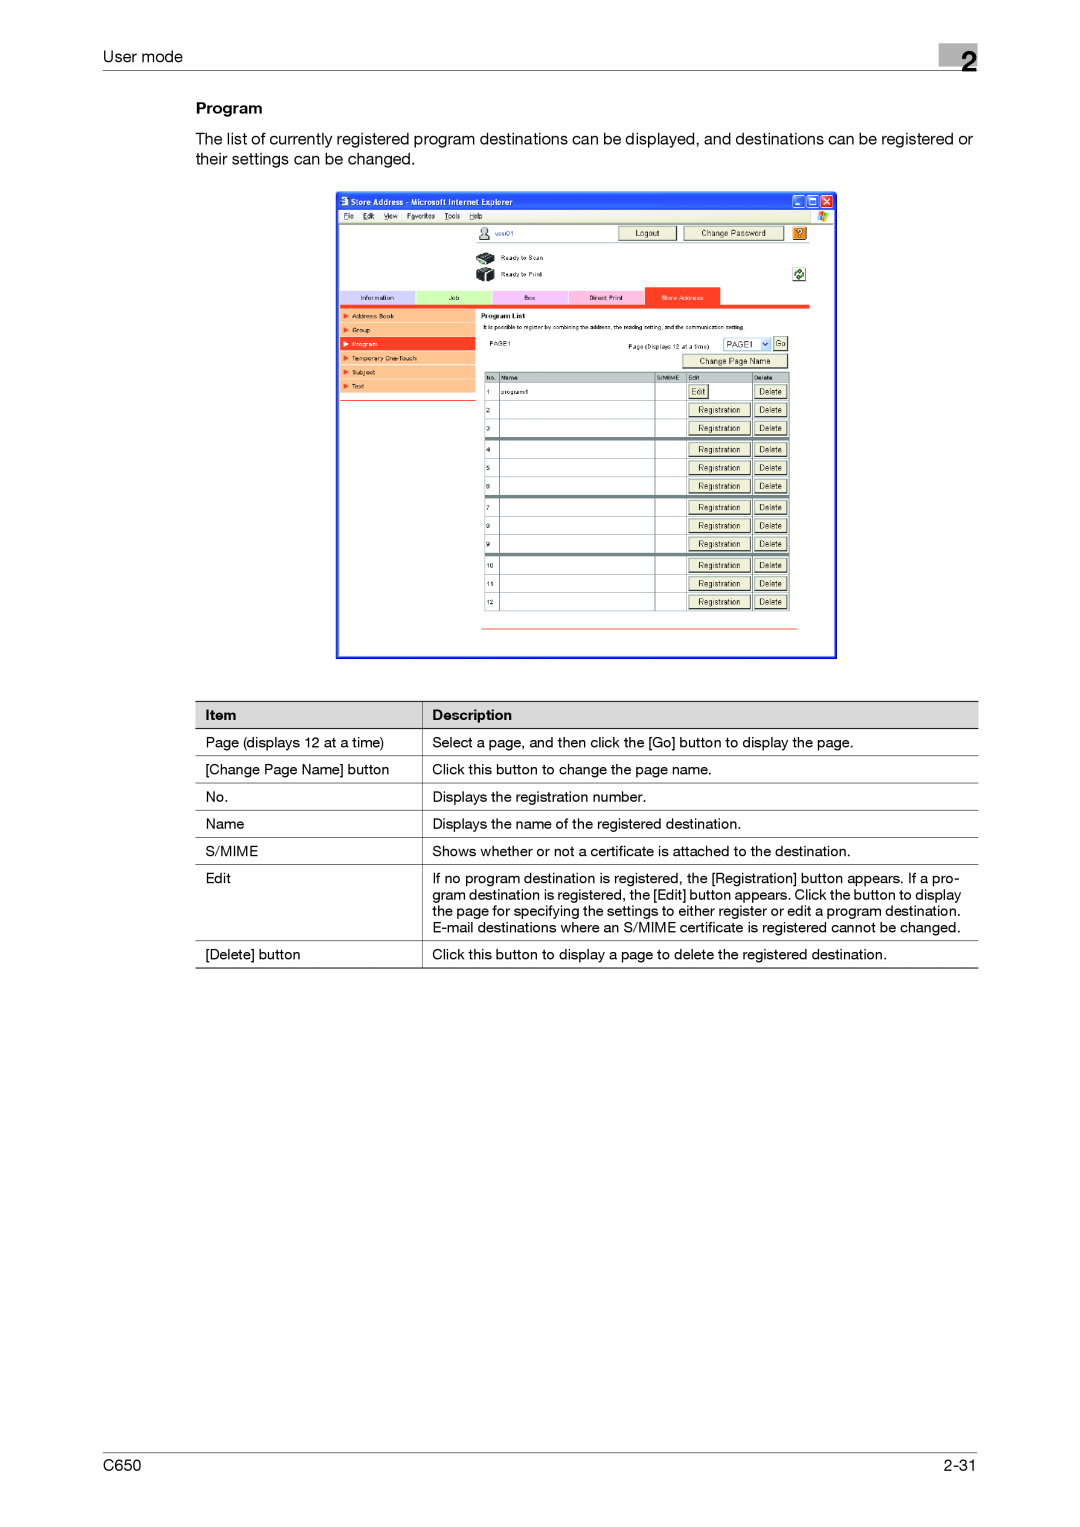 Konica Minolta C650 manual User mode, Program, 2-31 